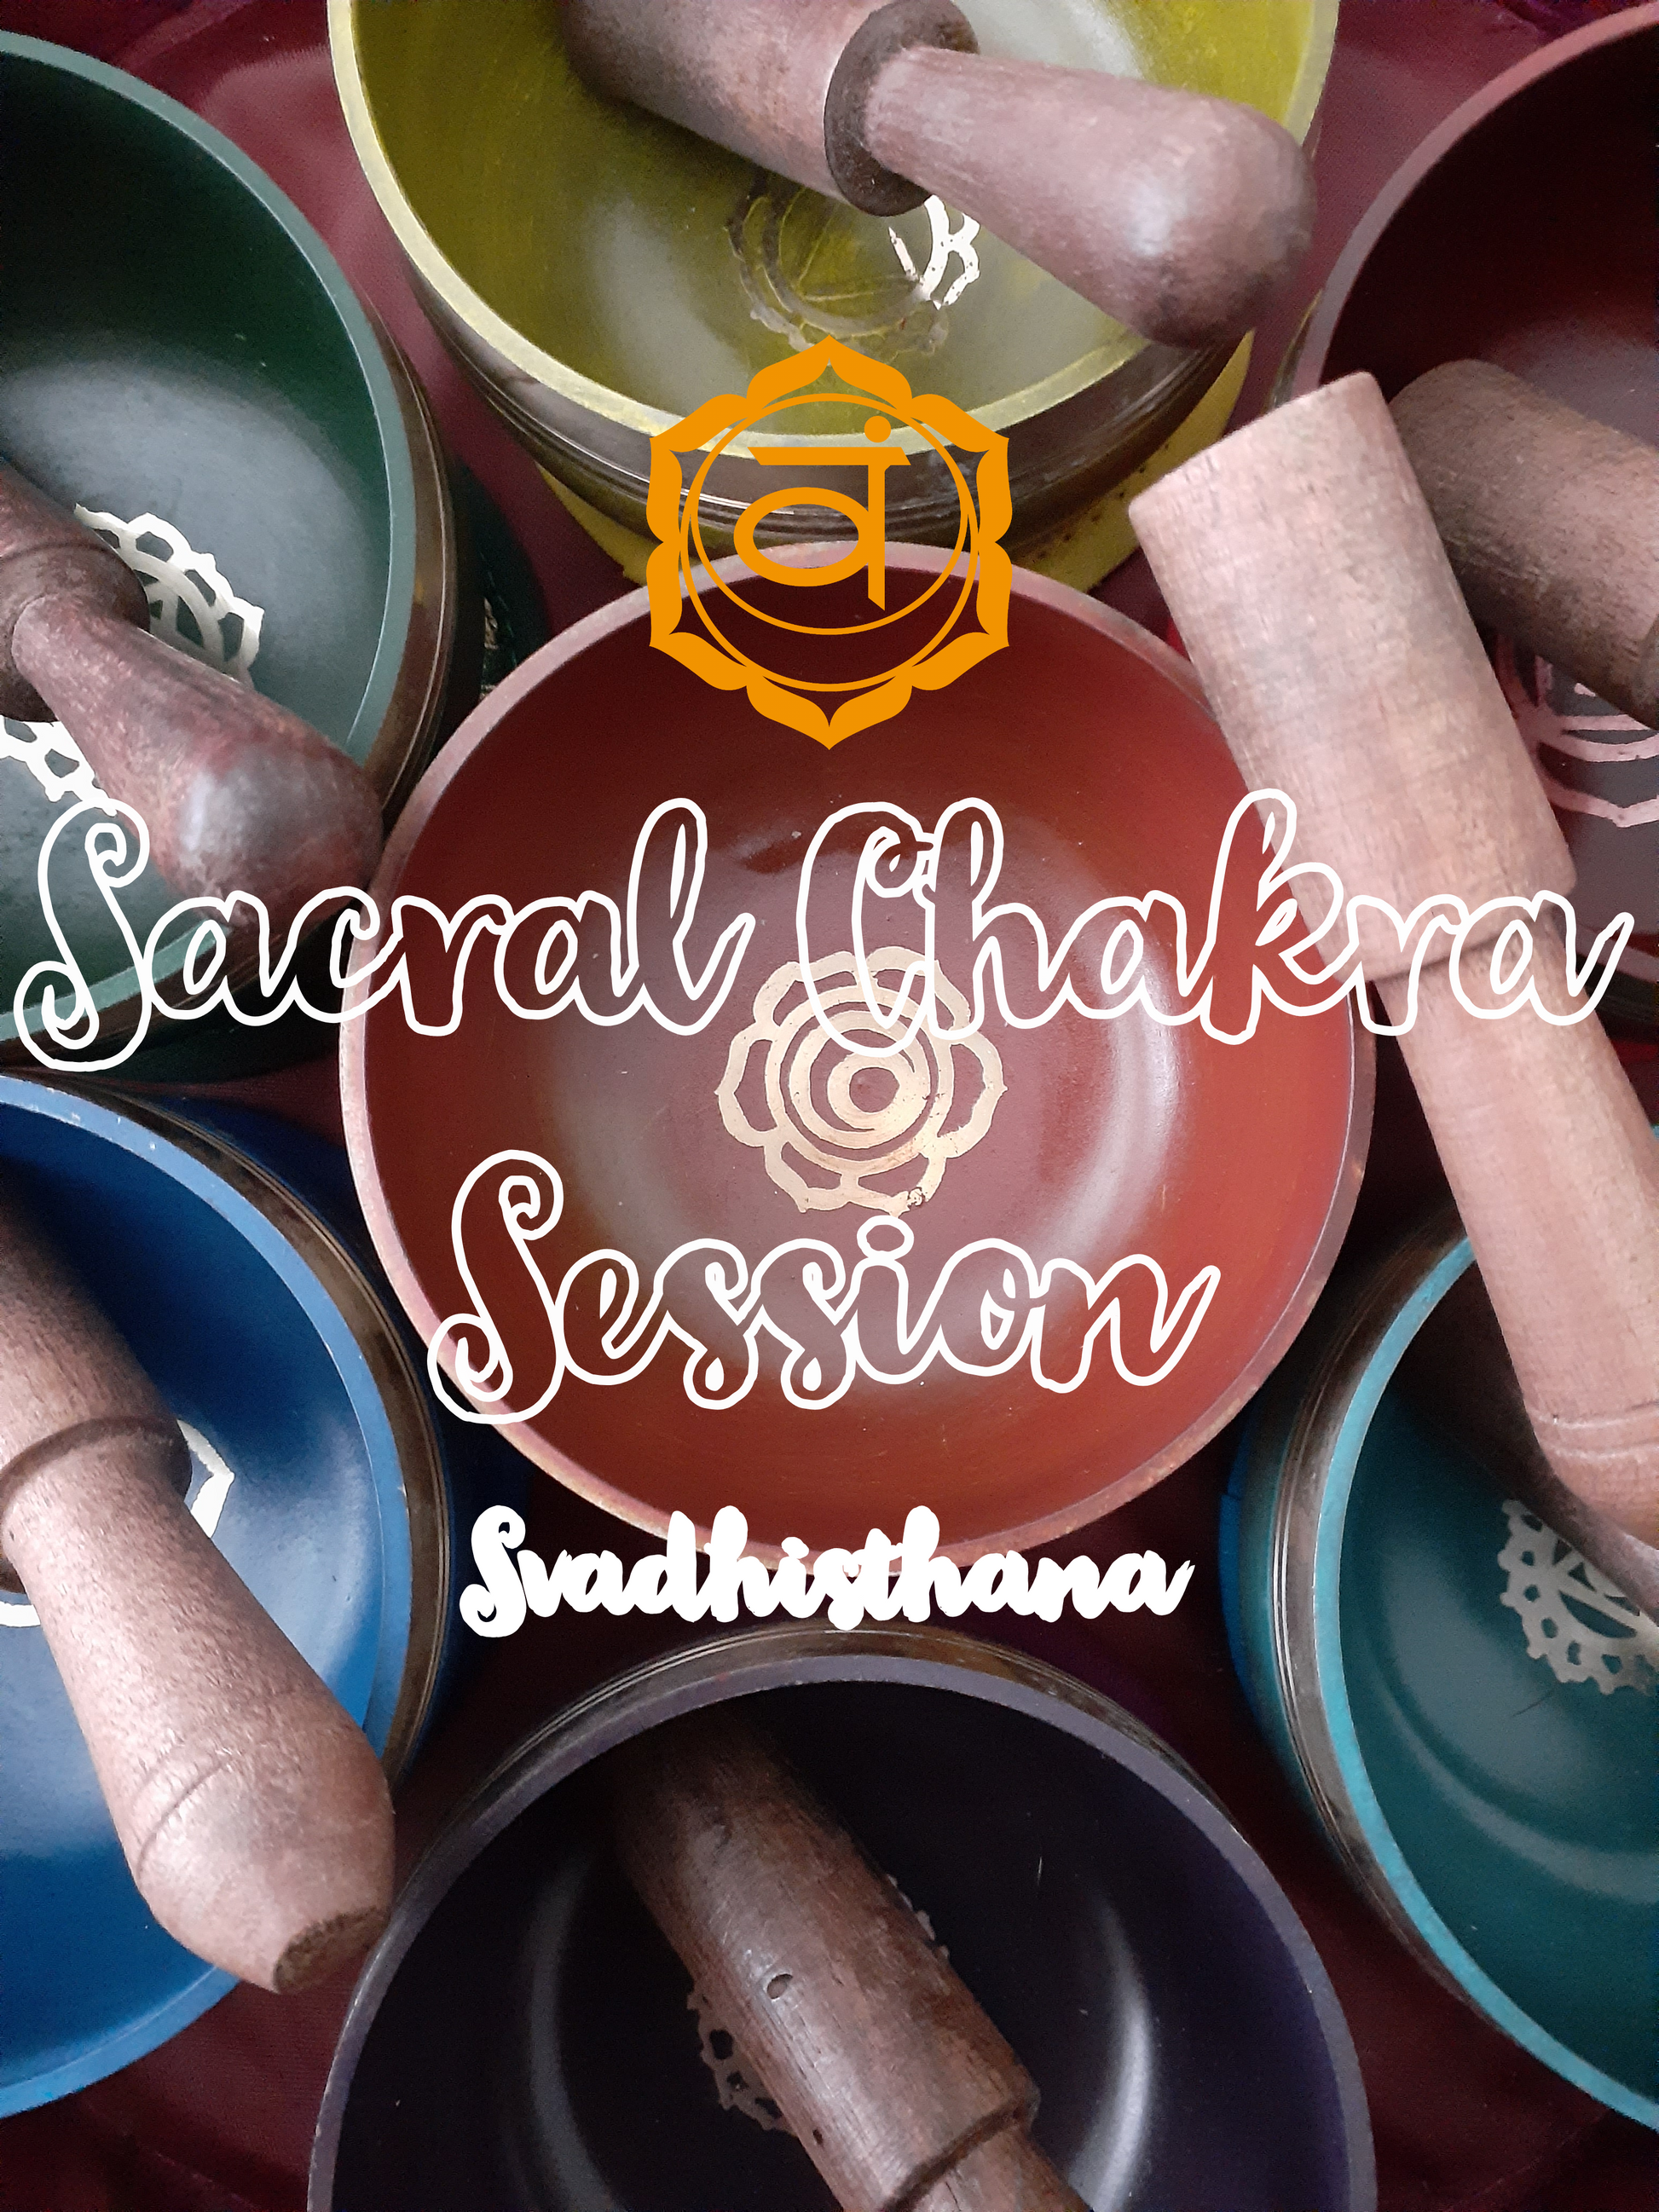 Sacral Chakra Session